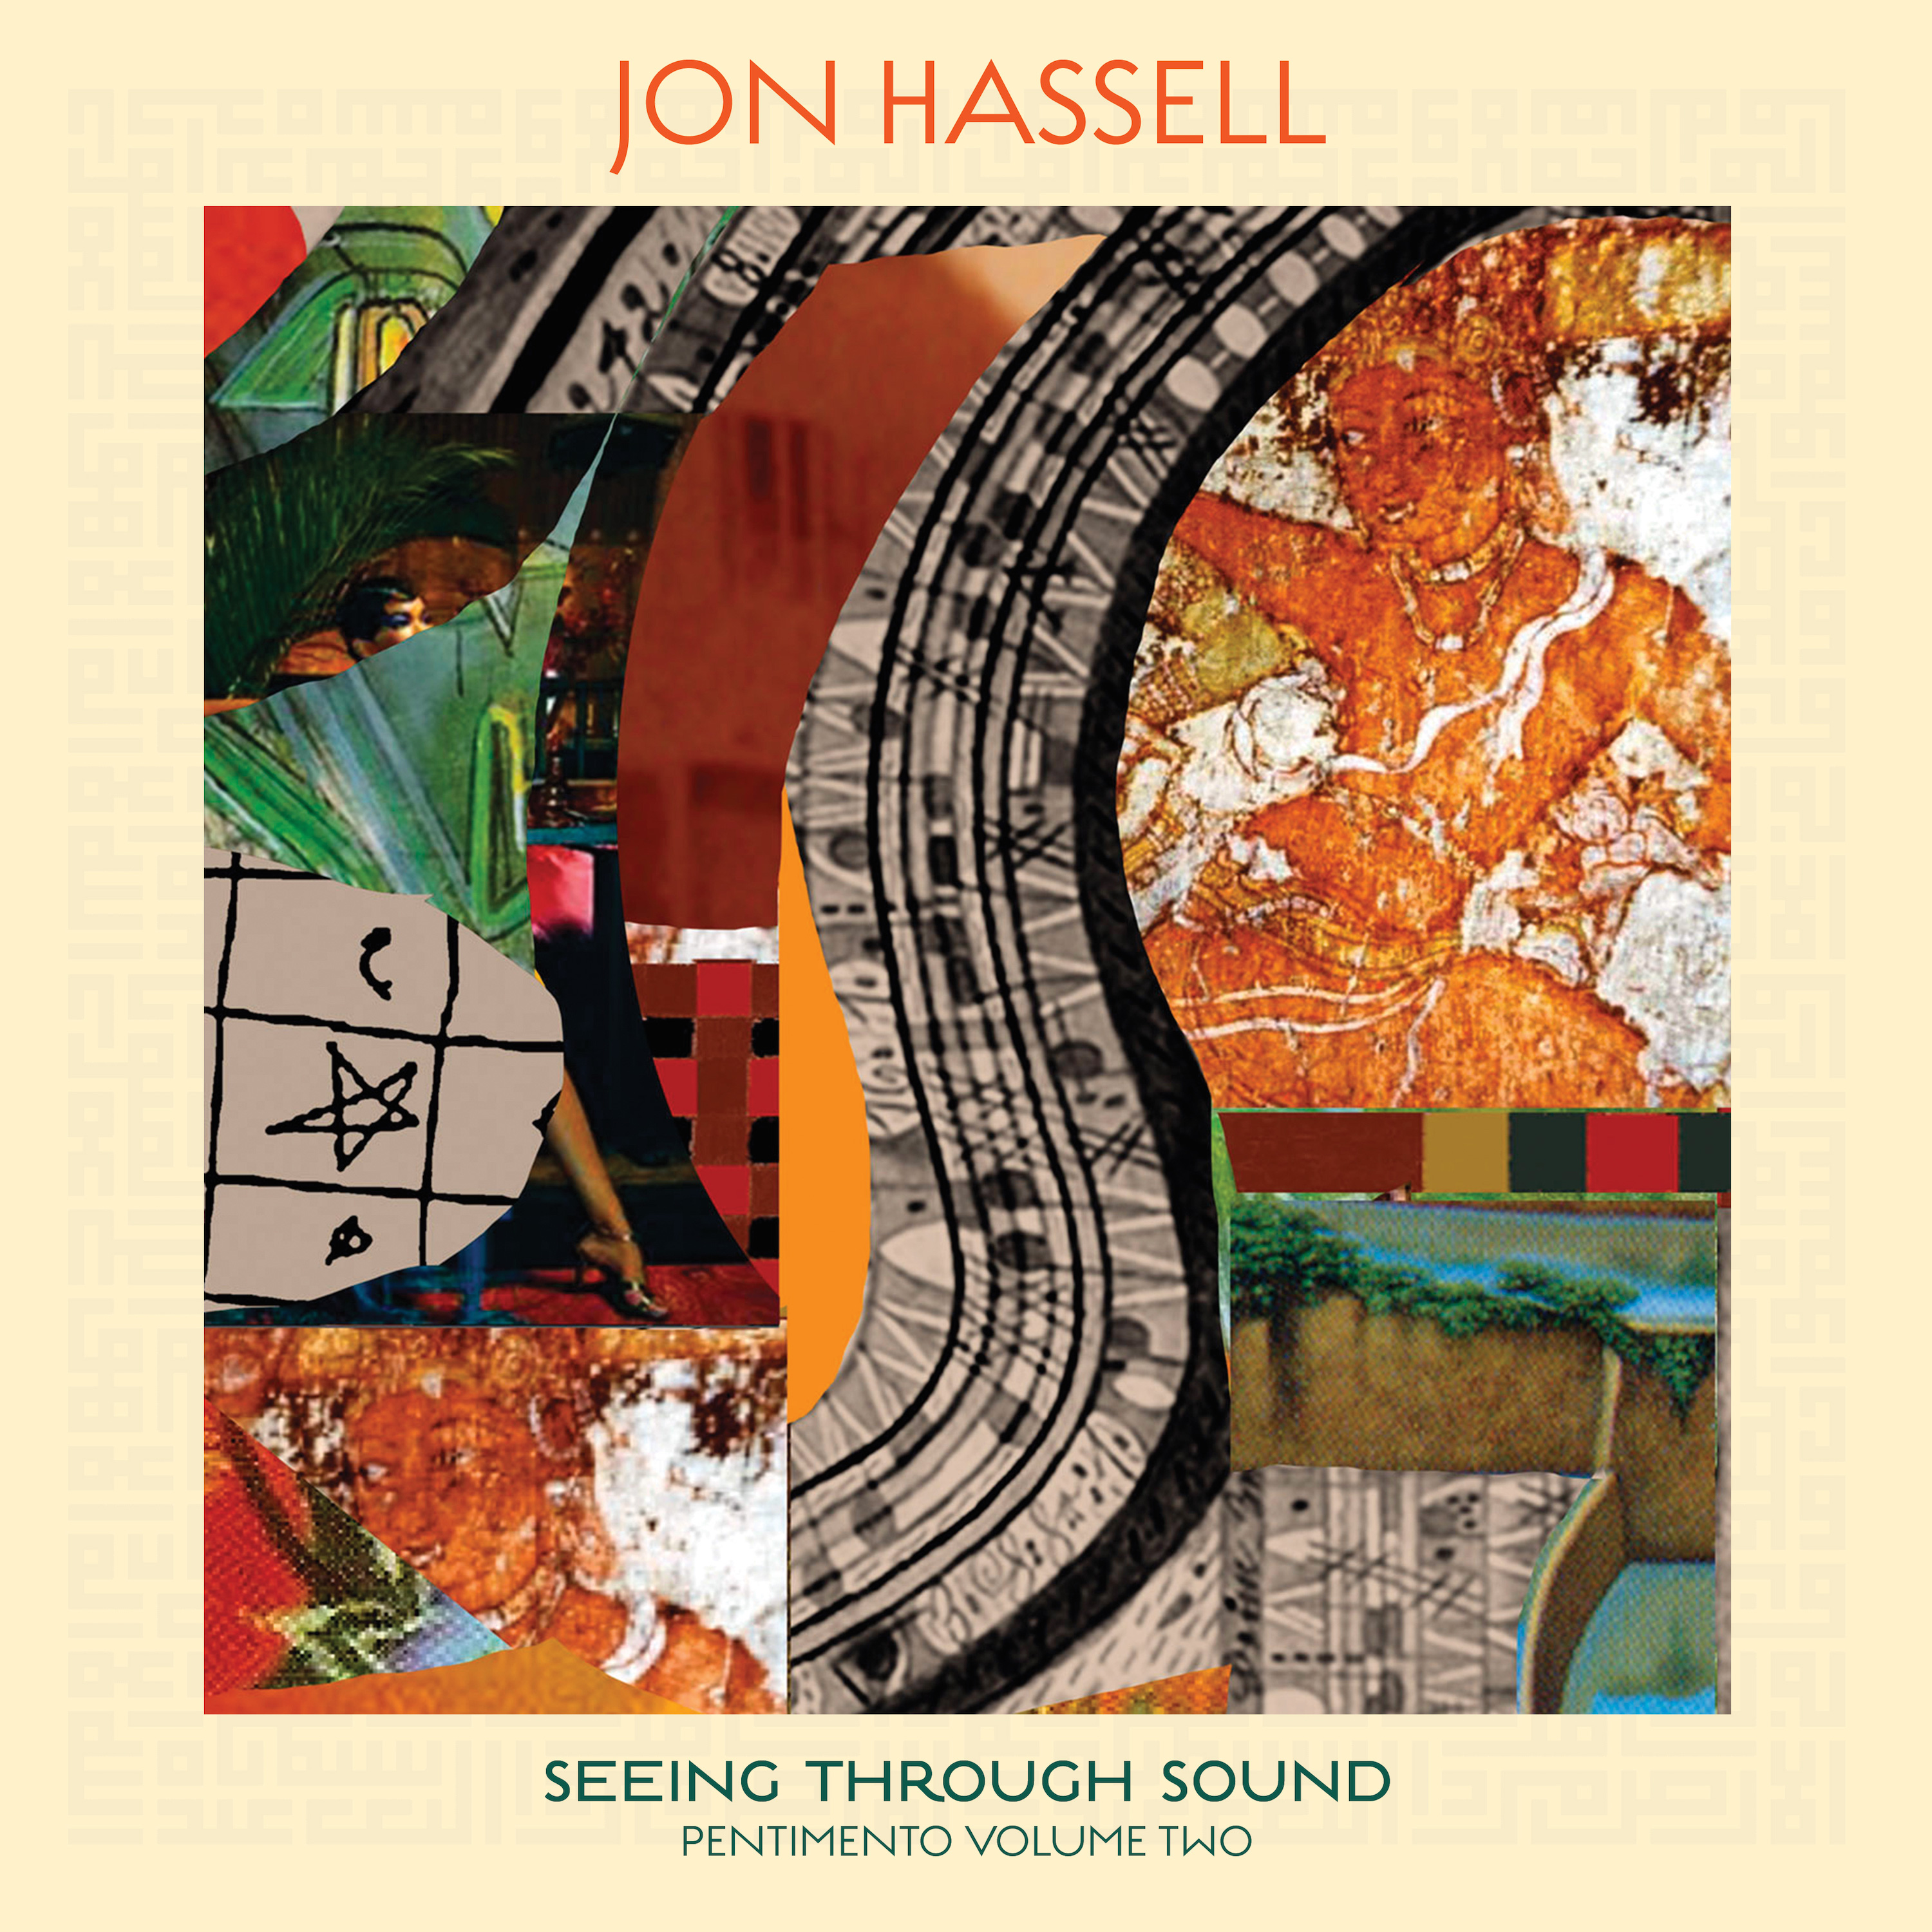 Jon Hassell - Seeing through sound